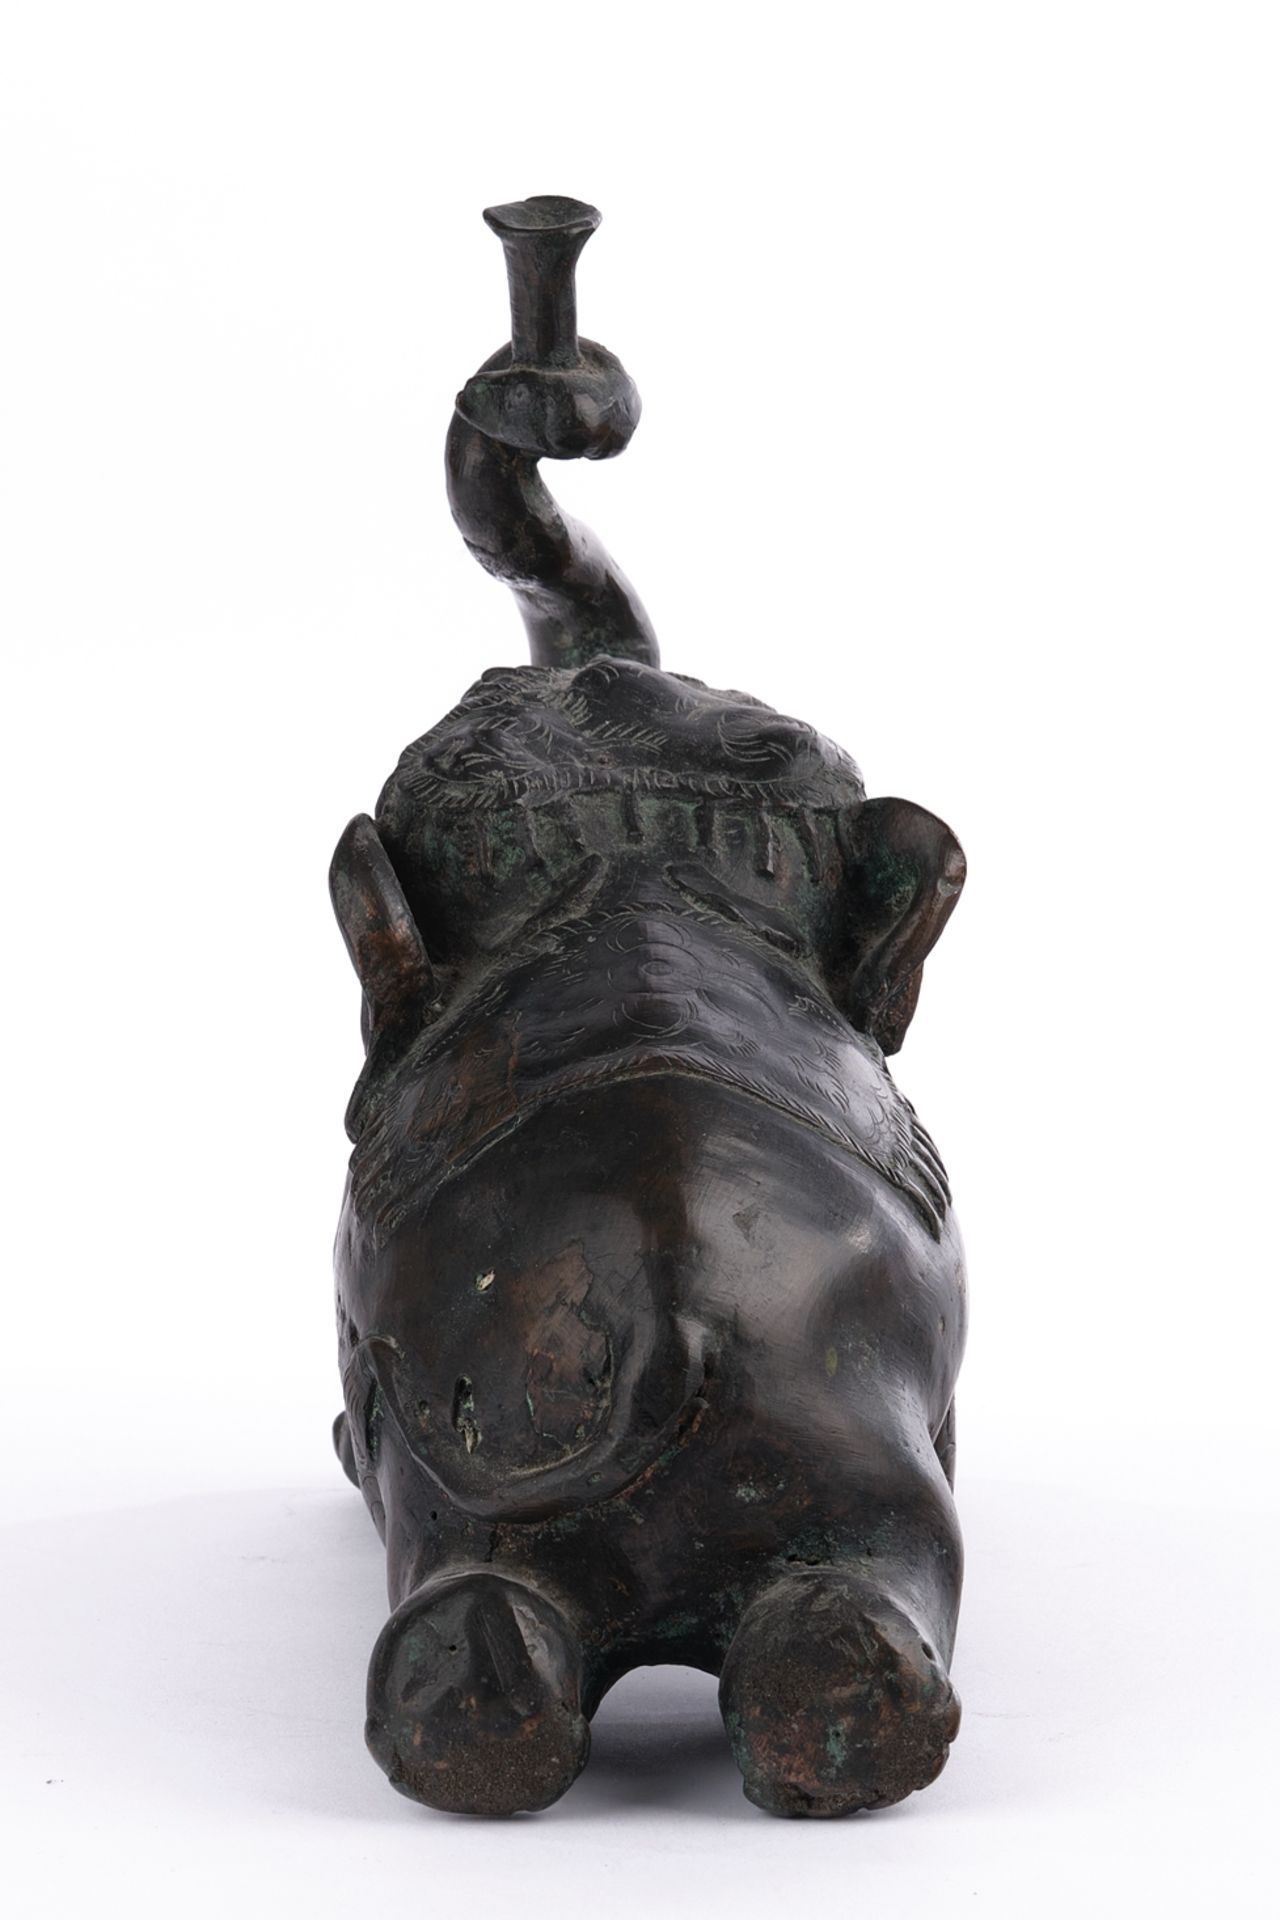 Sculpture, , "Reclining elephant", India, 20th/21st century, metal, dark patina, 22 cm high - Image 4 of 4